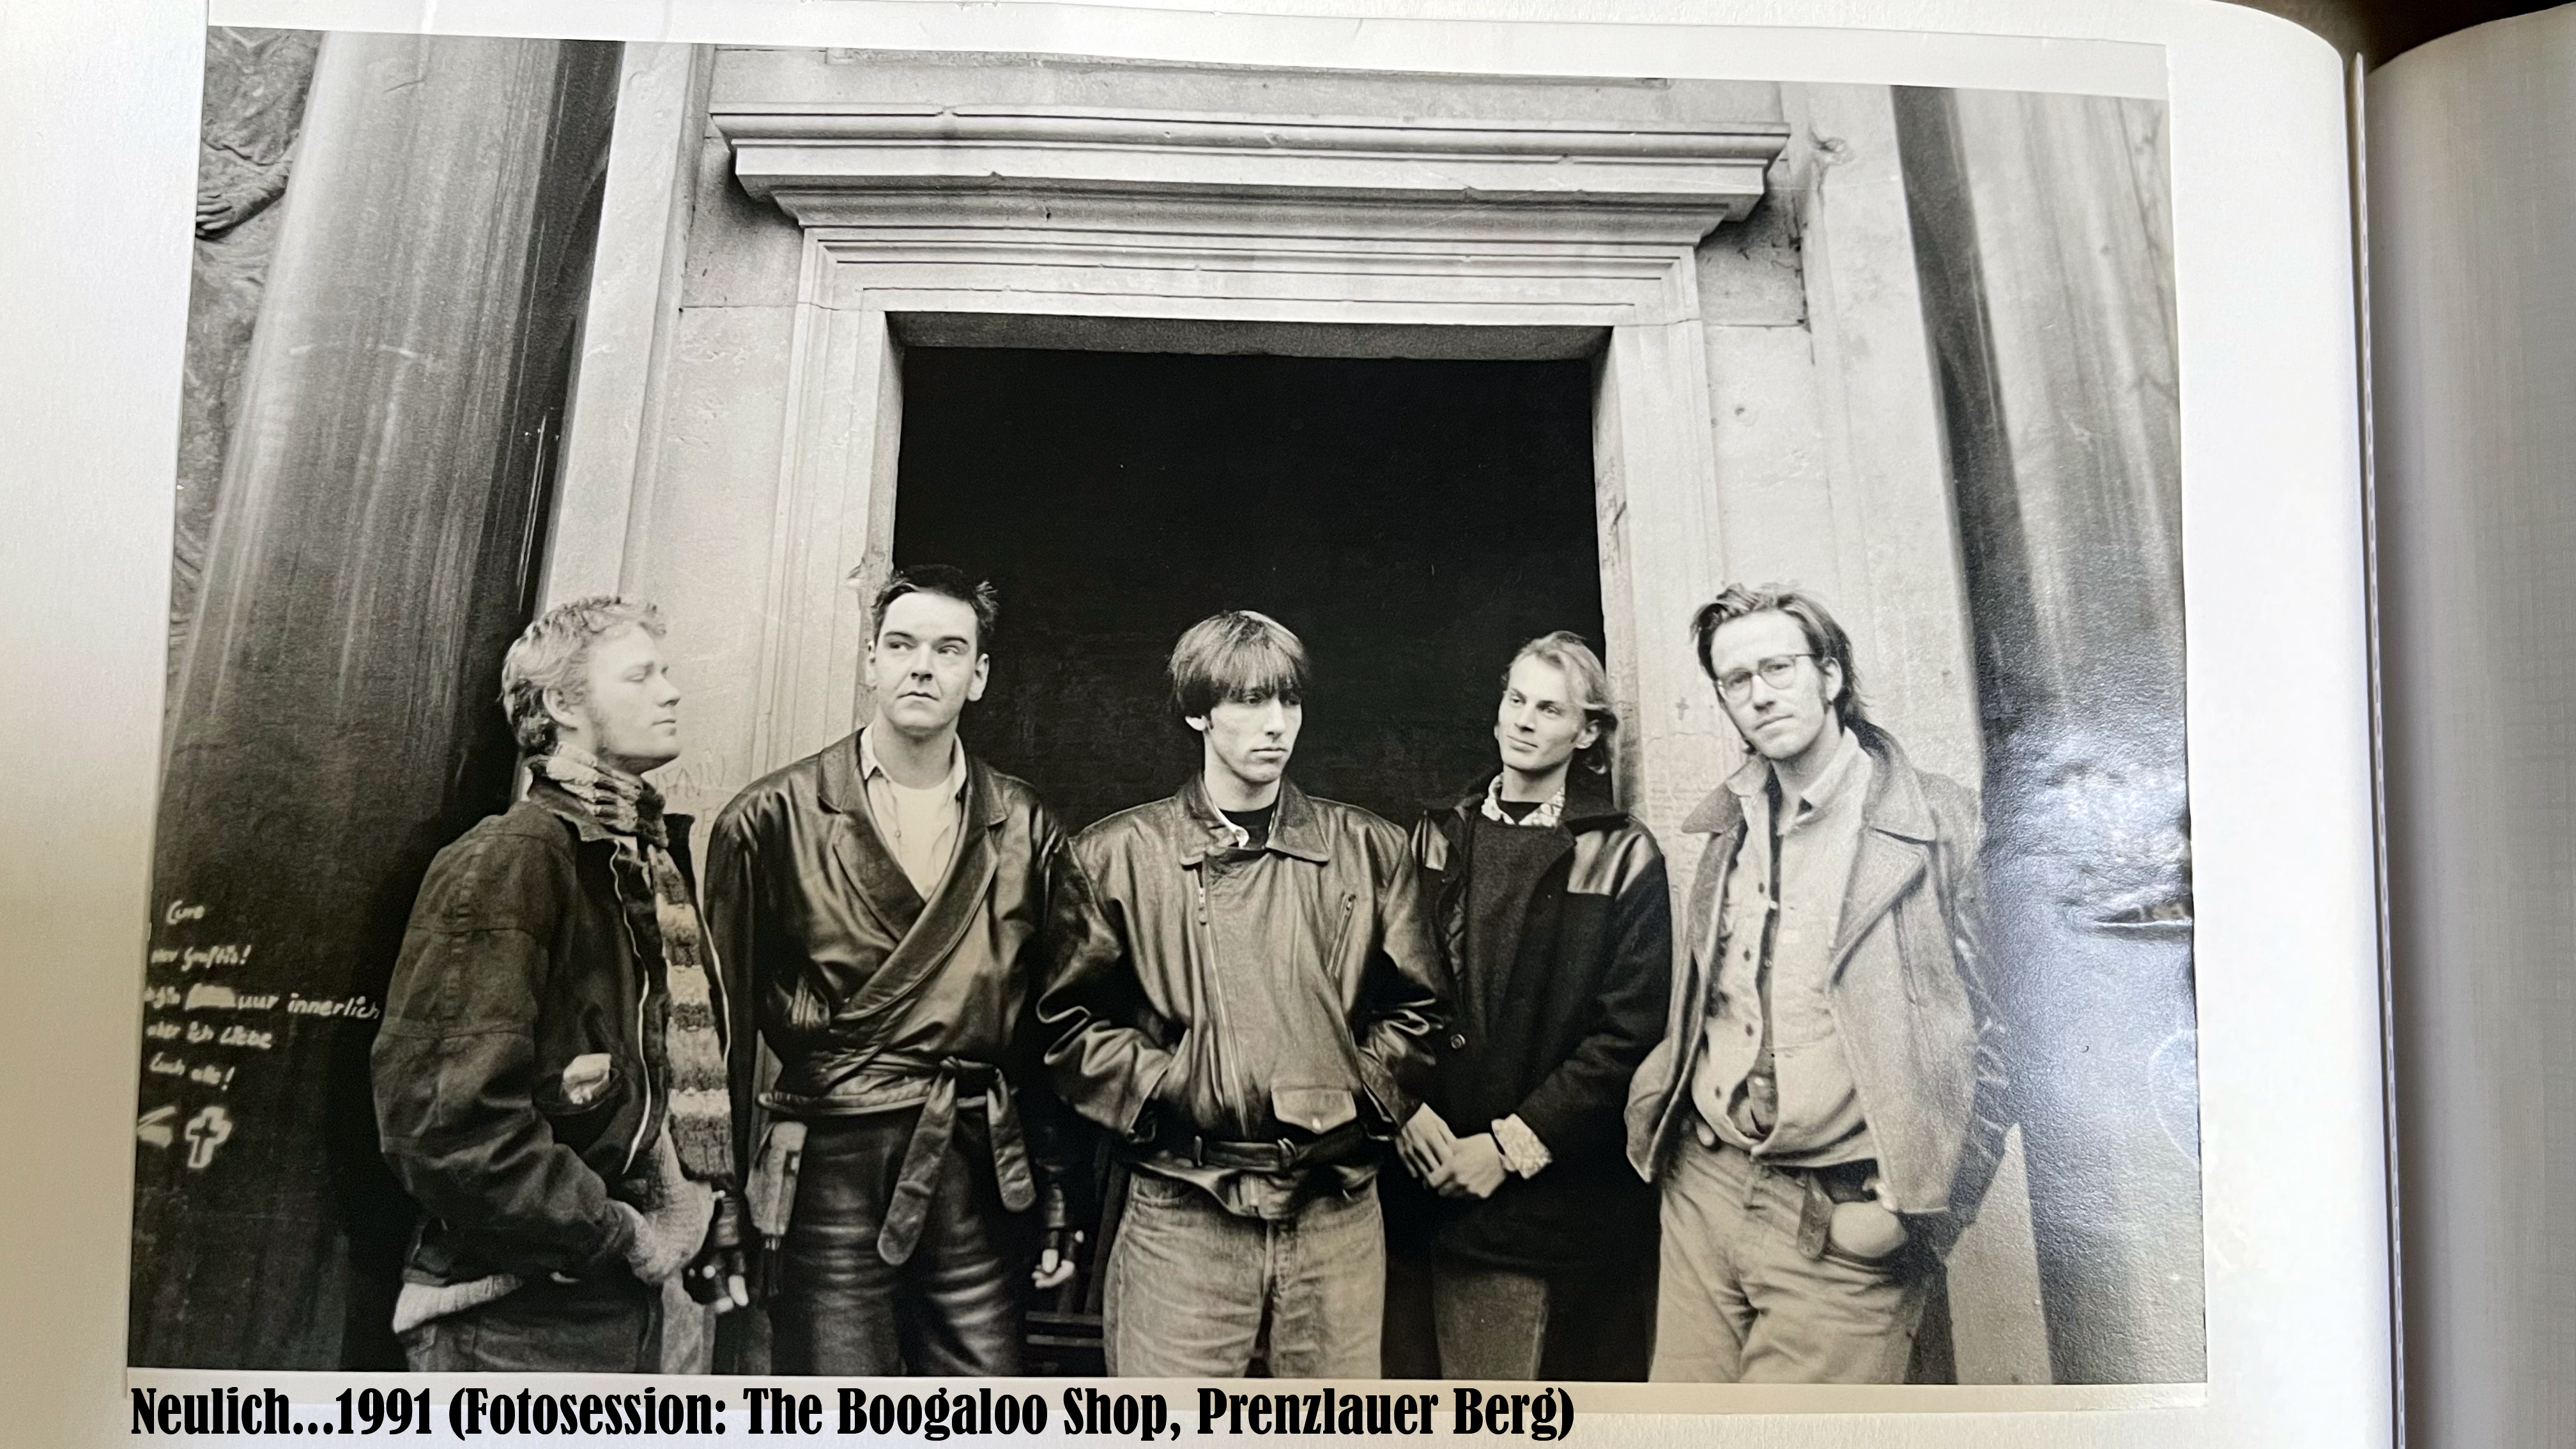 The Boogaloo Shop (Fotosession, 1991, Prenzlauer Berg) #VartaMusikpreis #1991 #QuartierLatin #TTT #Tulipstagram